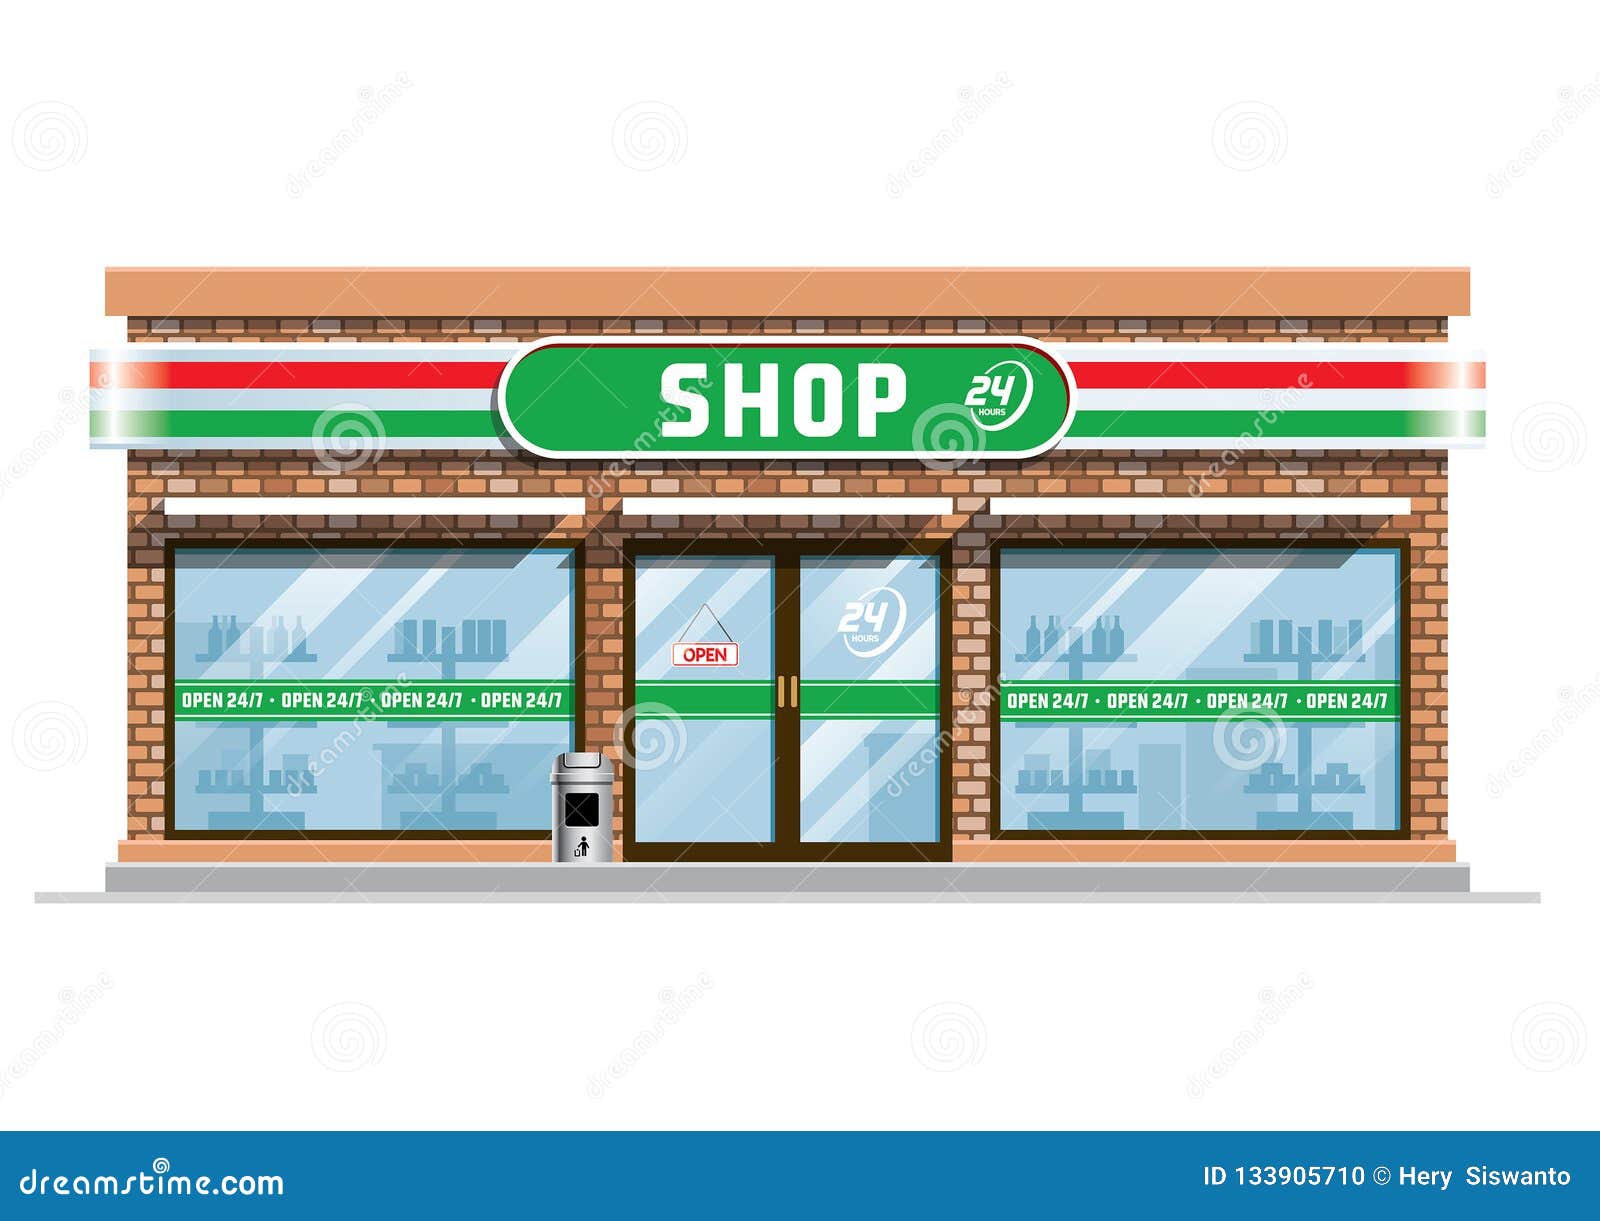 convenience store building